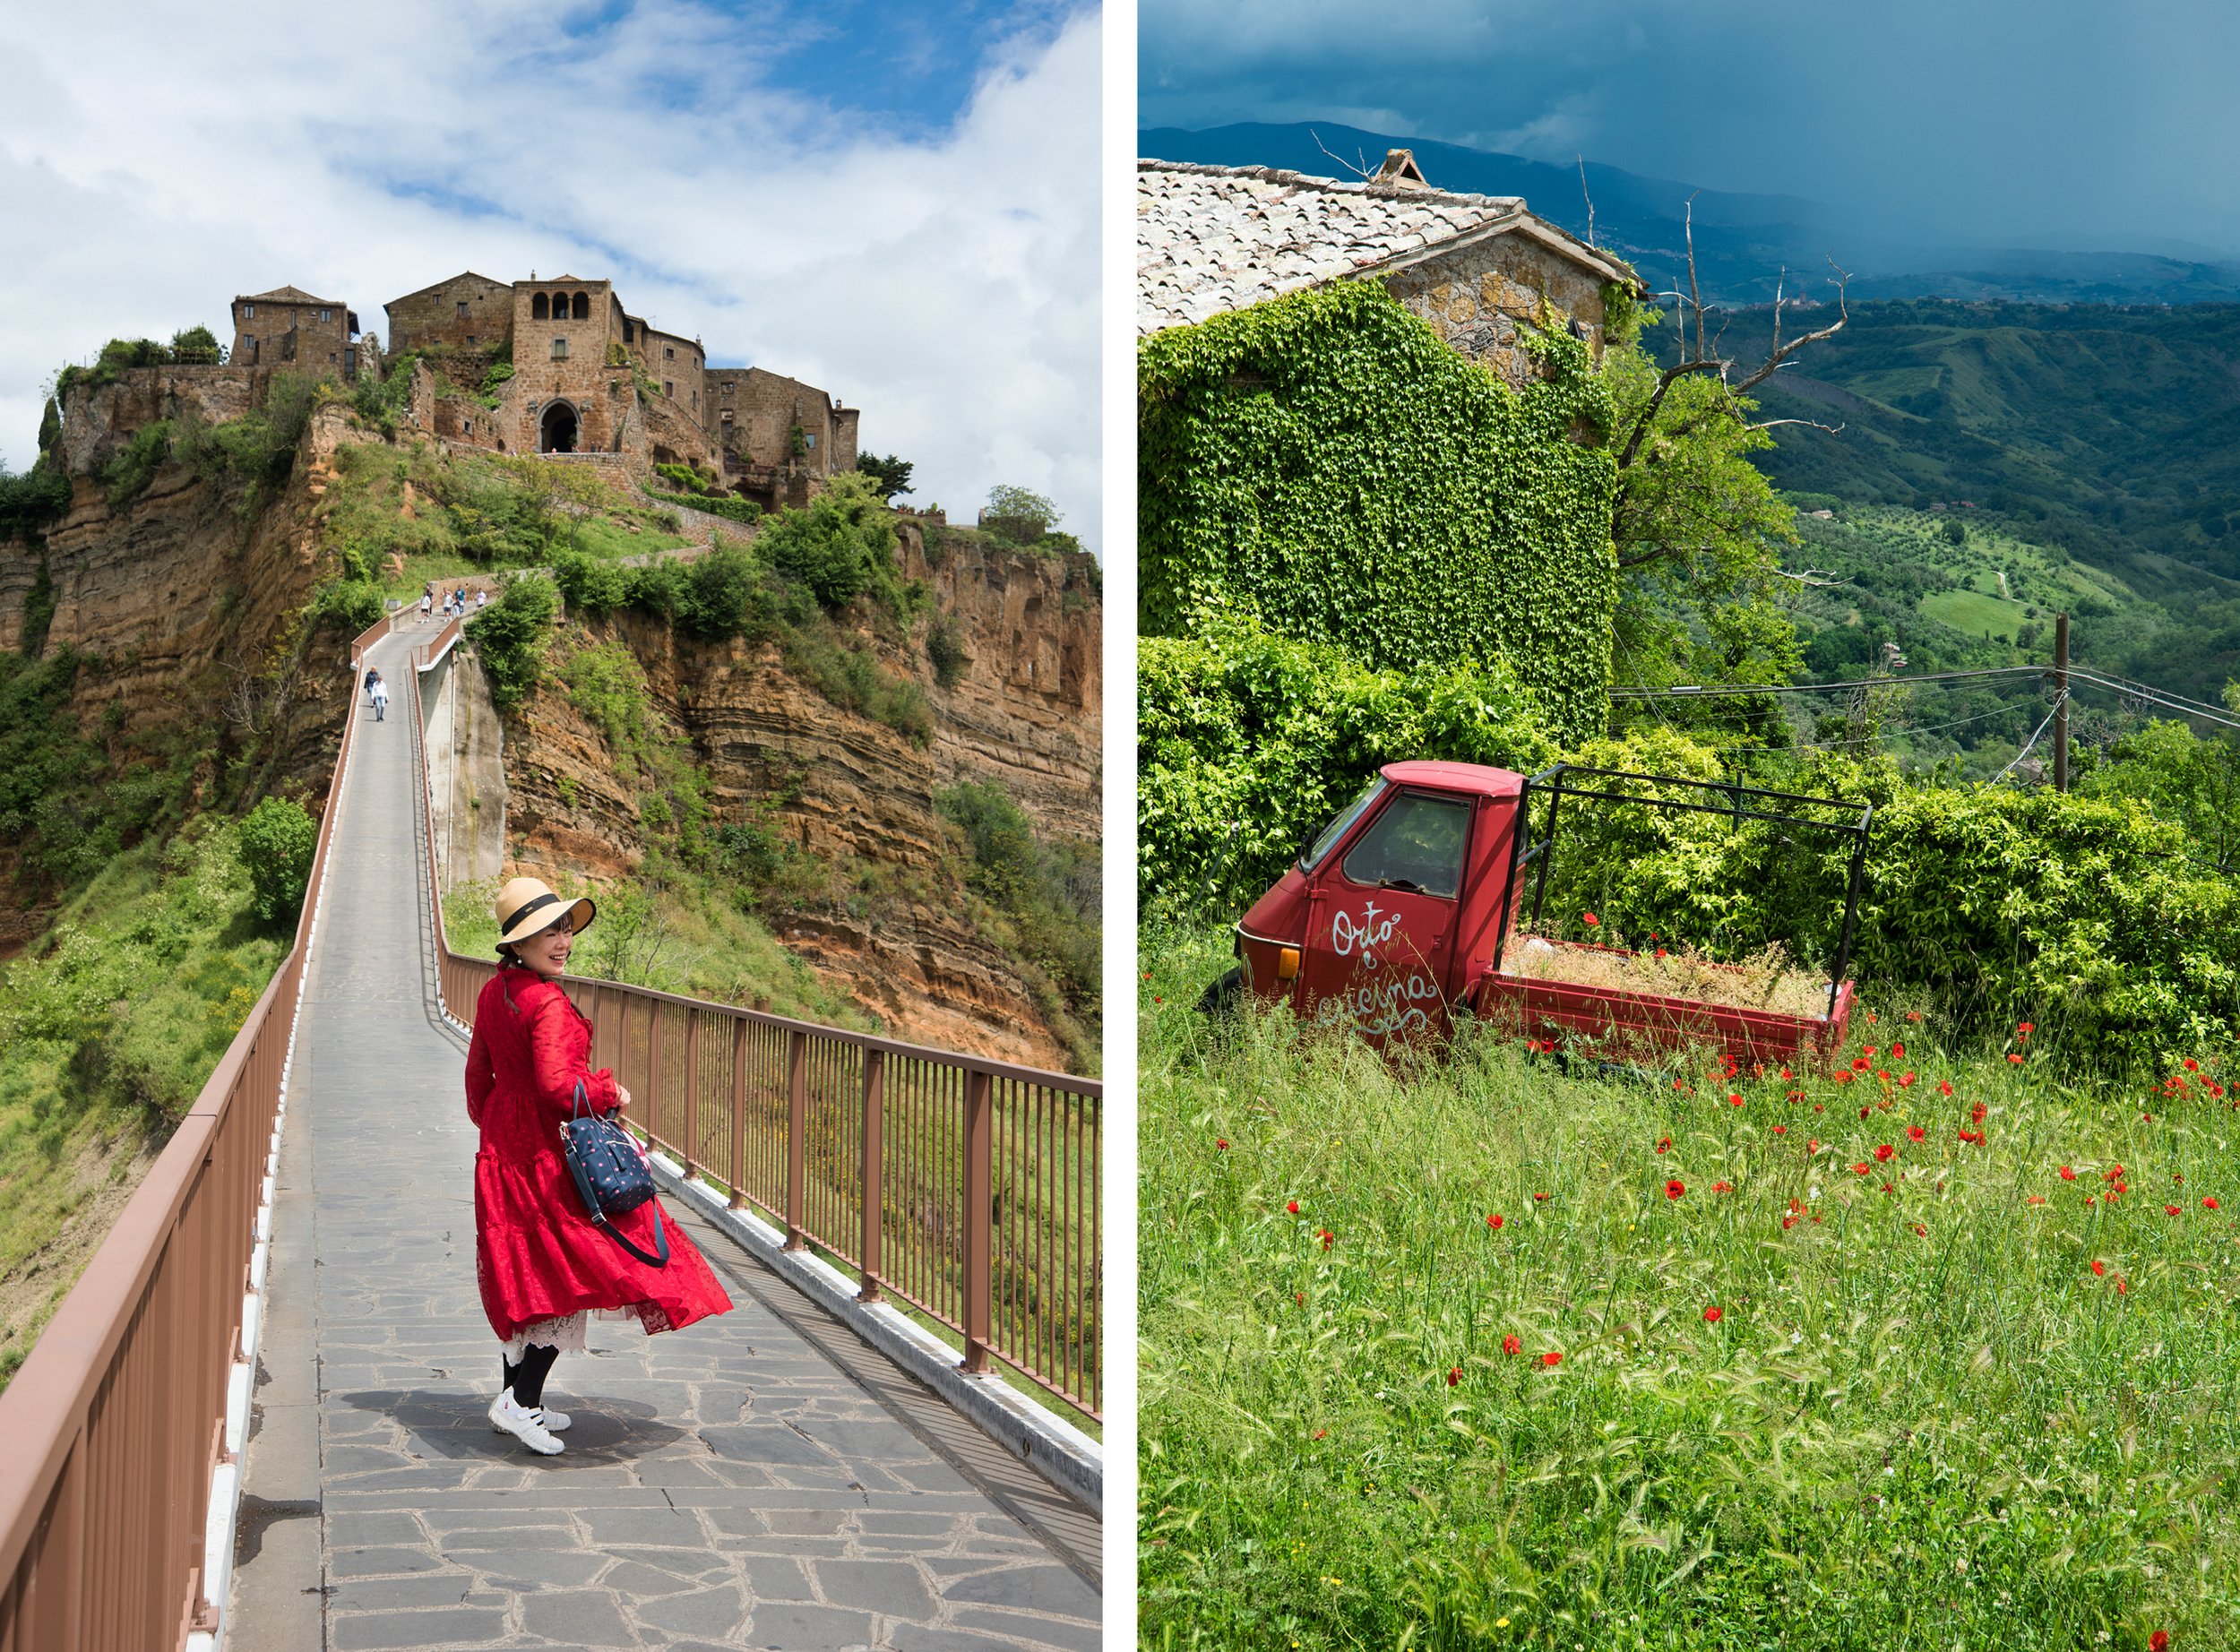 Crystal-Waye-People-Photographer-Italy-Girl-Red-Dress-Truck.jpg